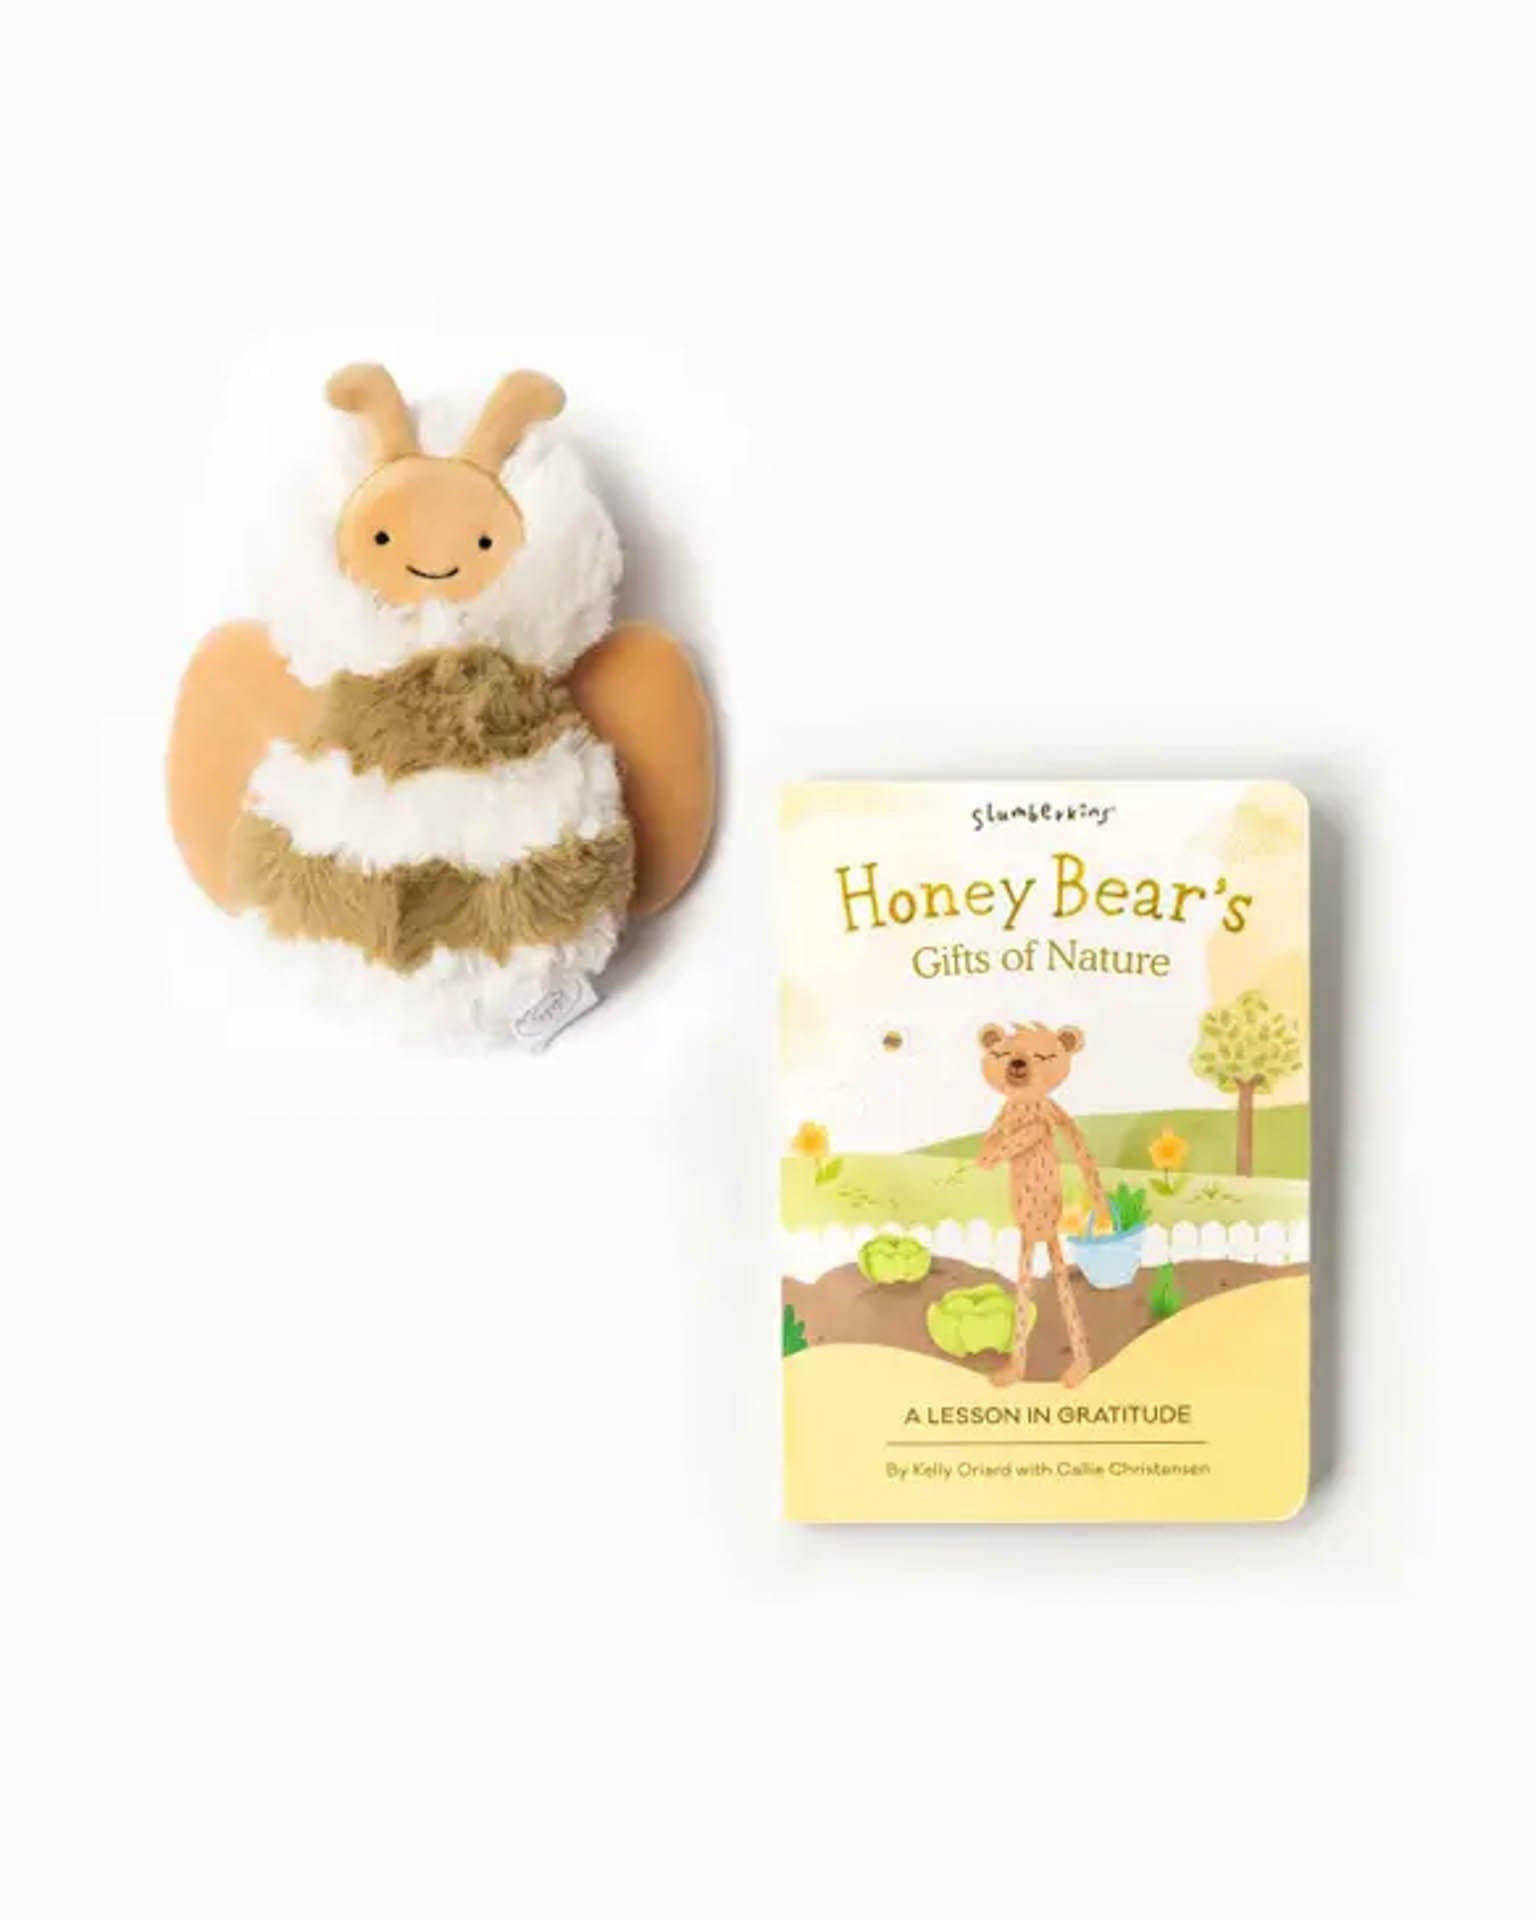 Little slumberkins play honey bee mini & honey bear lesson book - gratitude